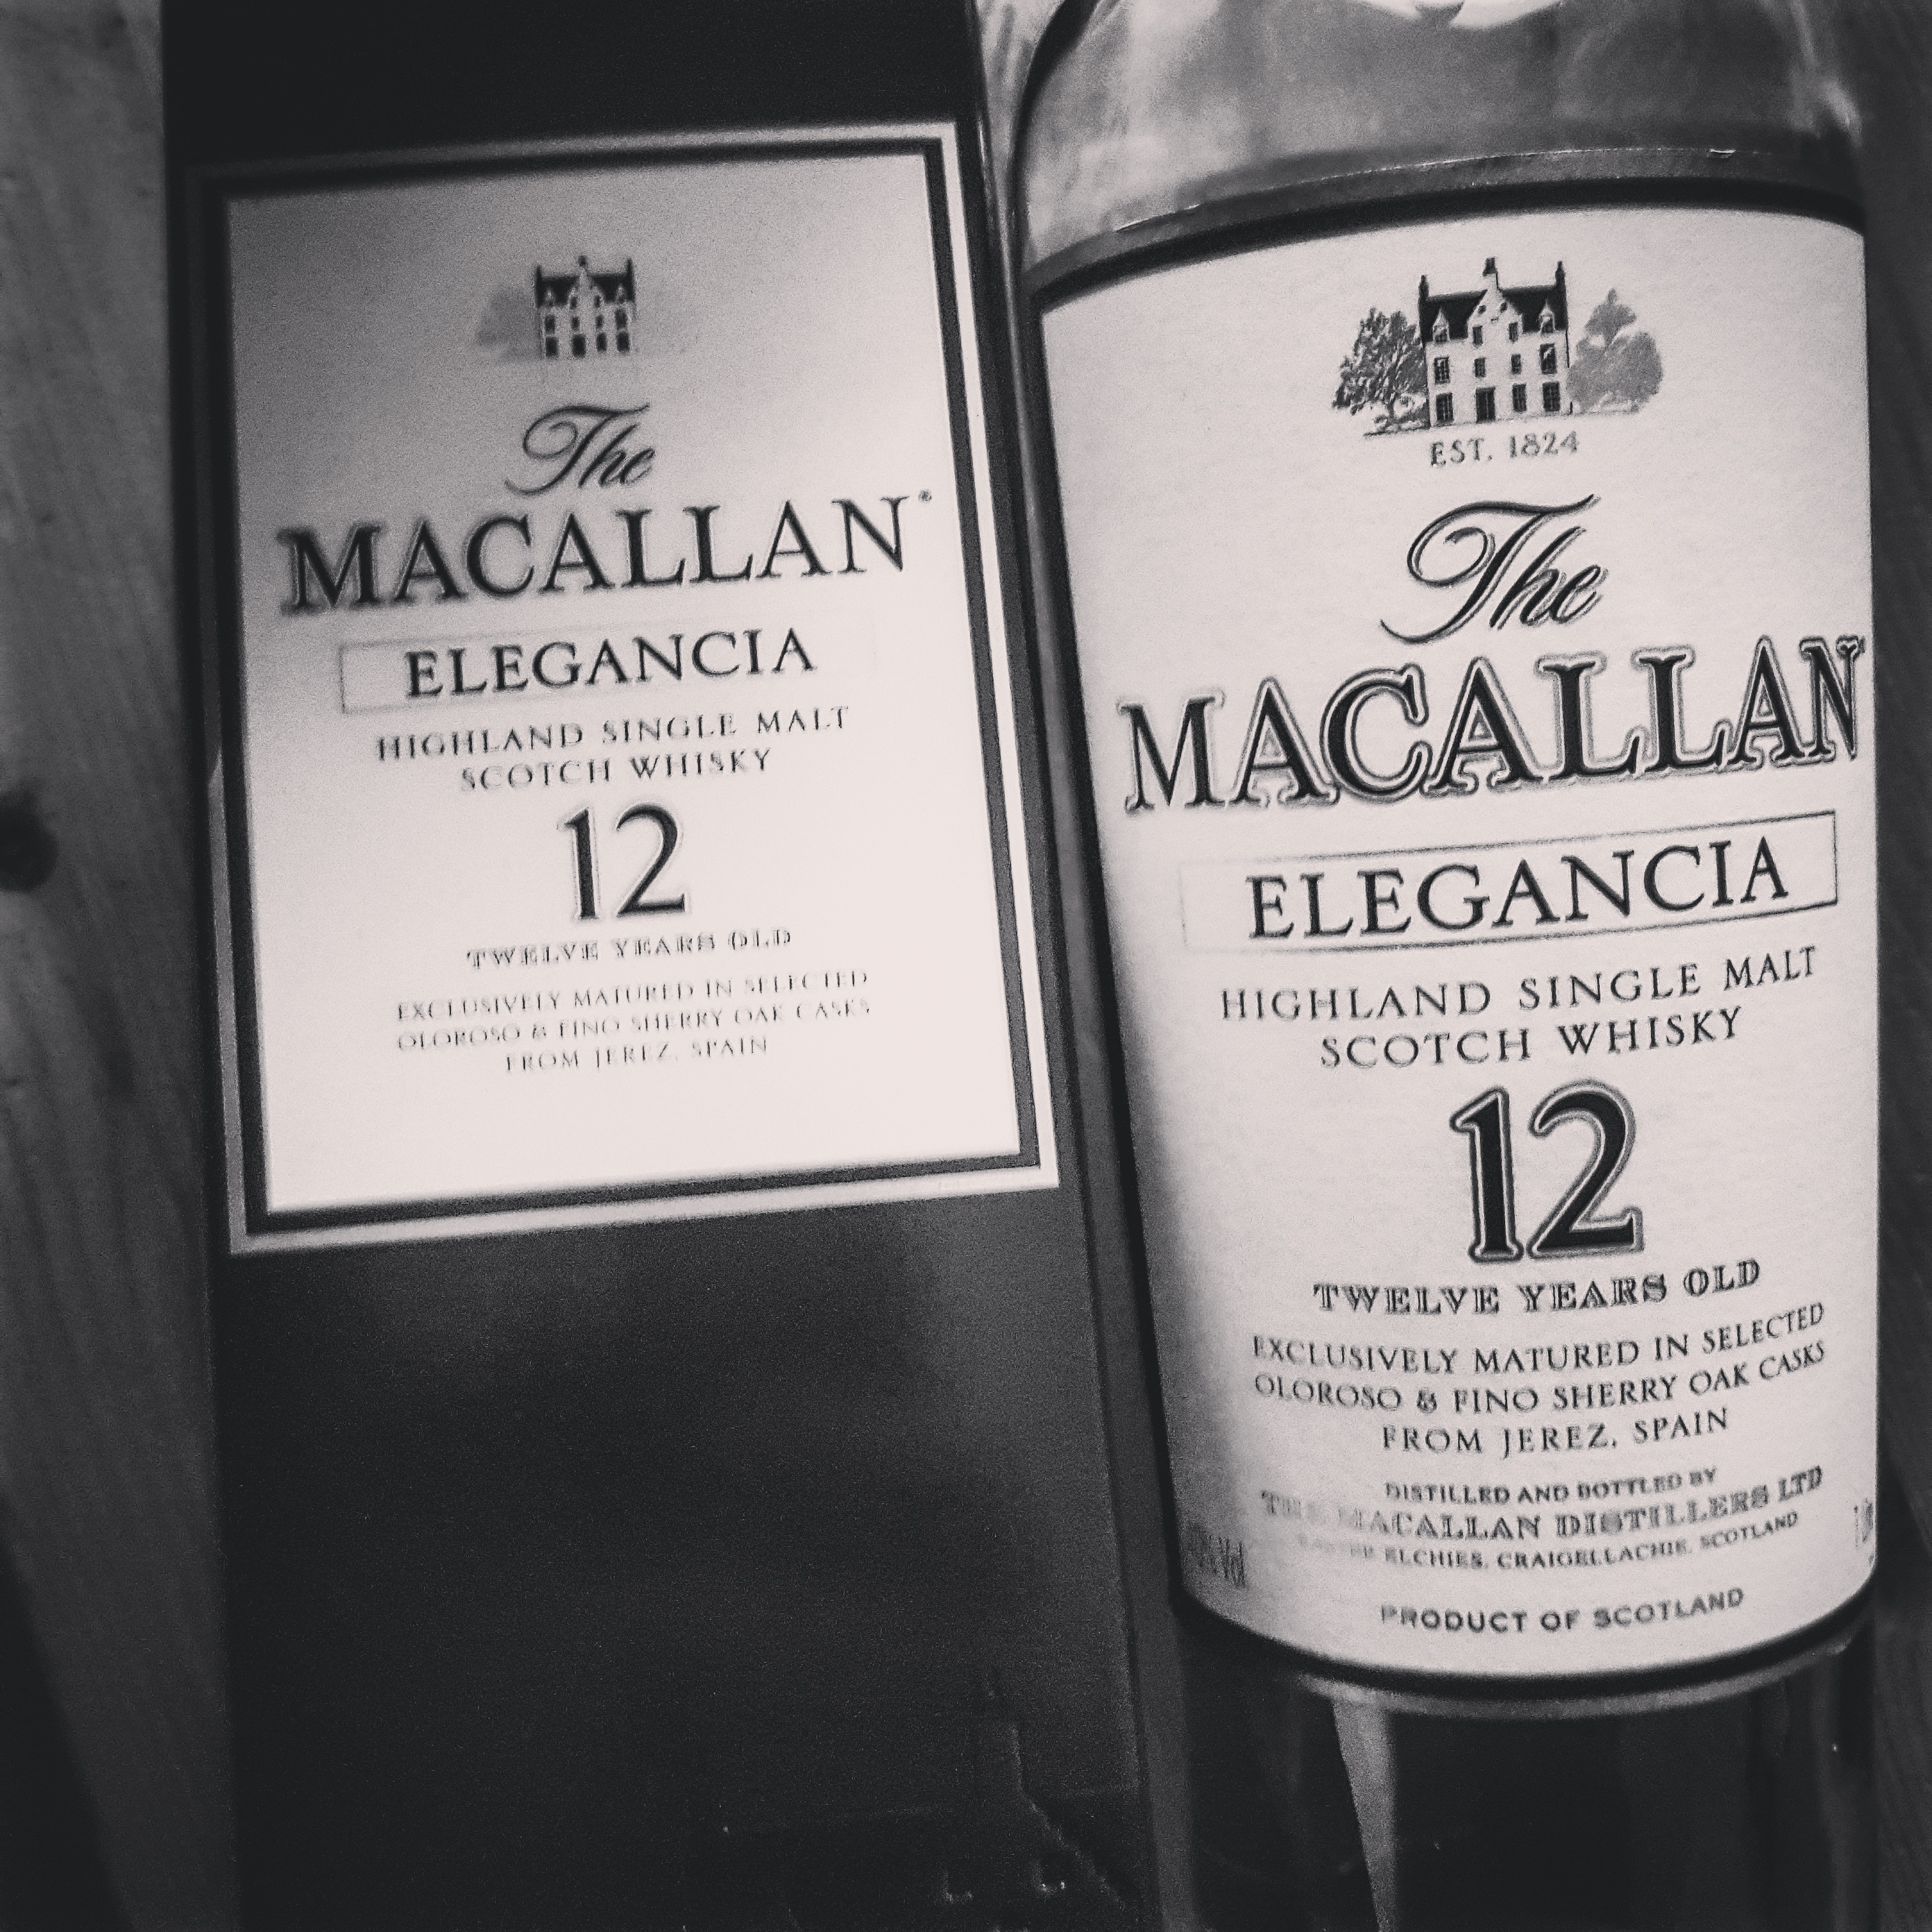 The Macallan Elegancia 12 Jahre Highland Single Malt Scotch Whisky